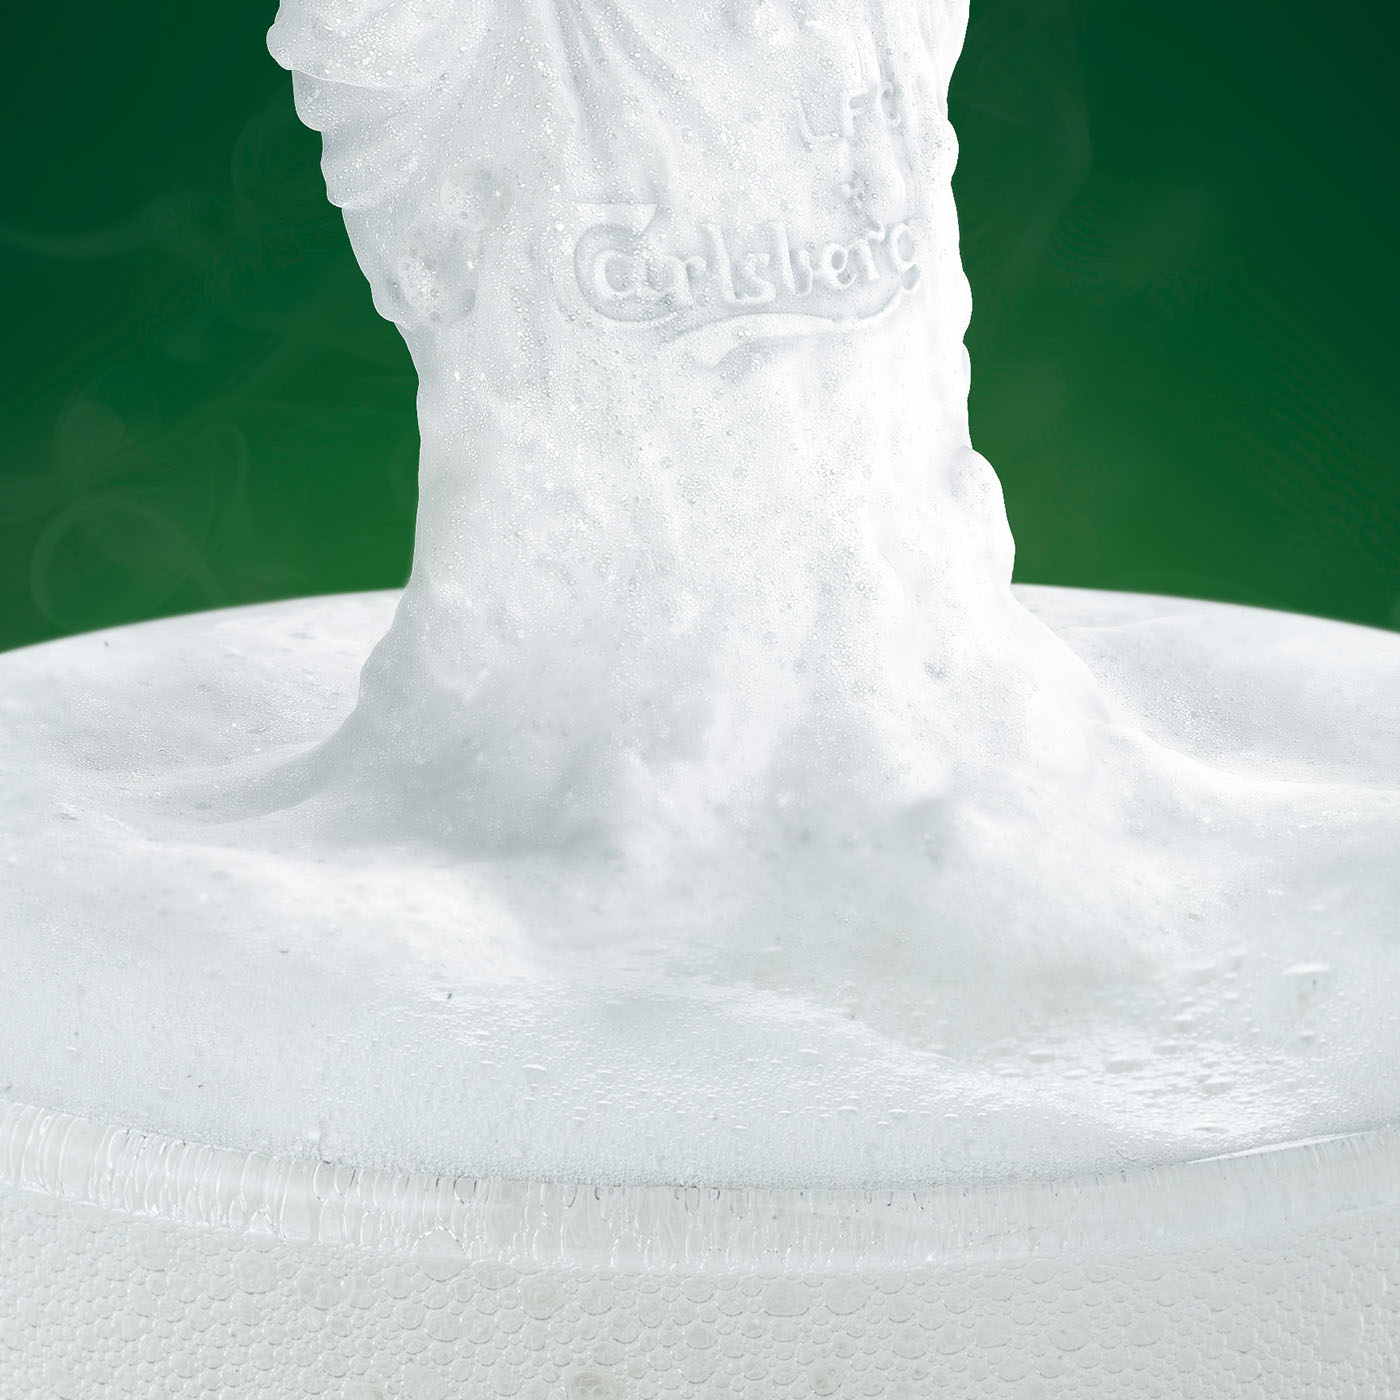 Foam CGI Carlsberg beer